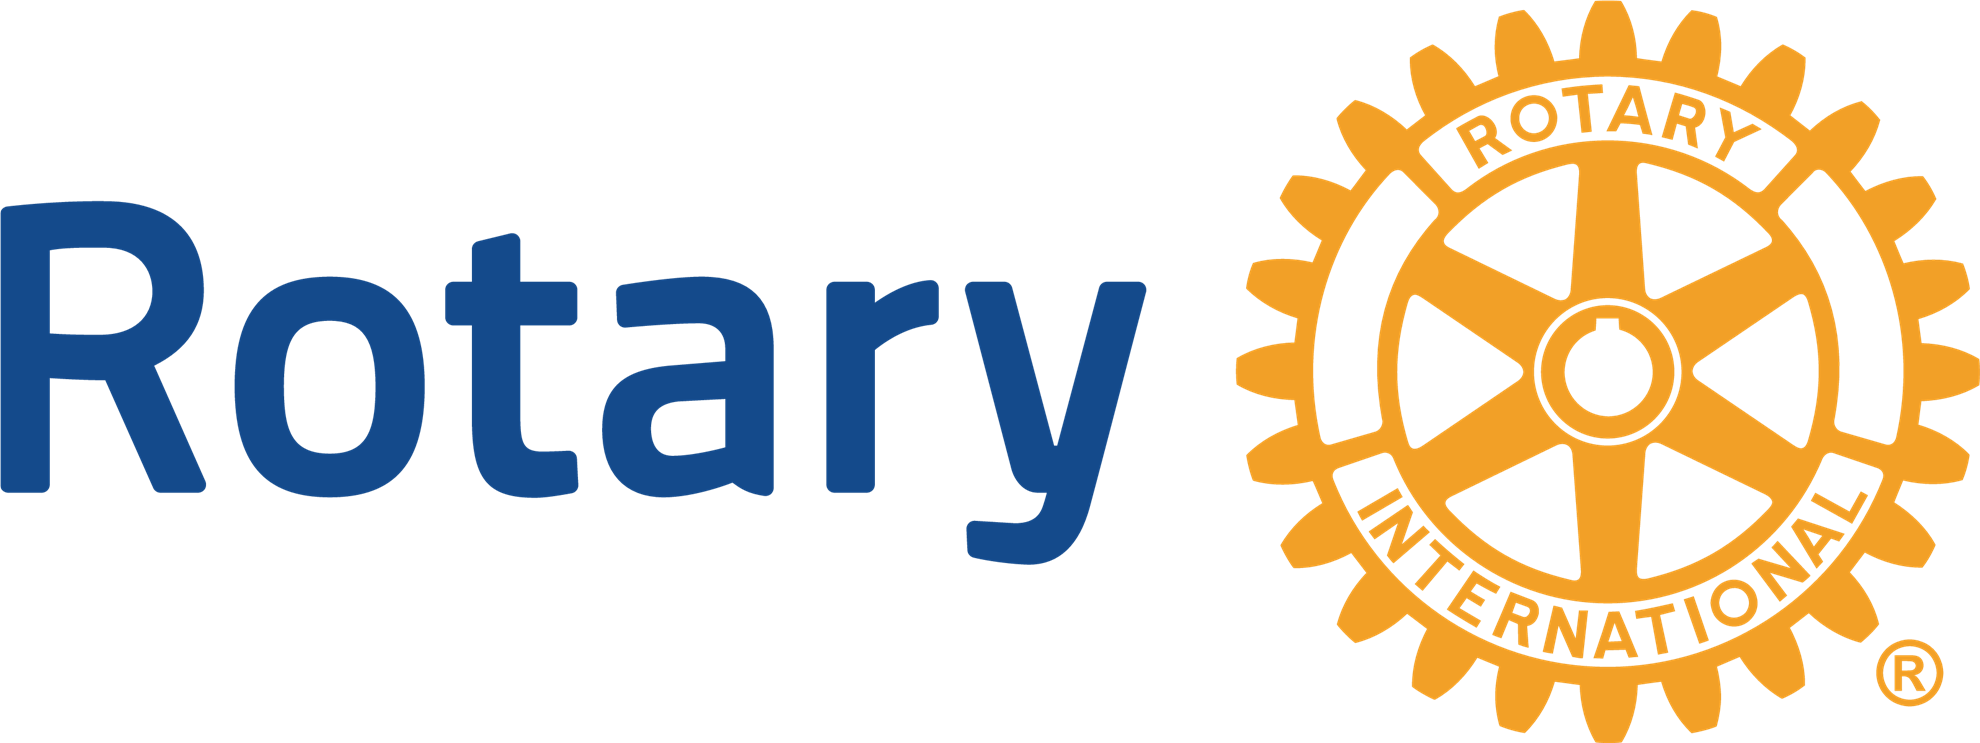 Albury North logo